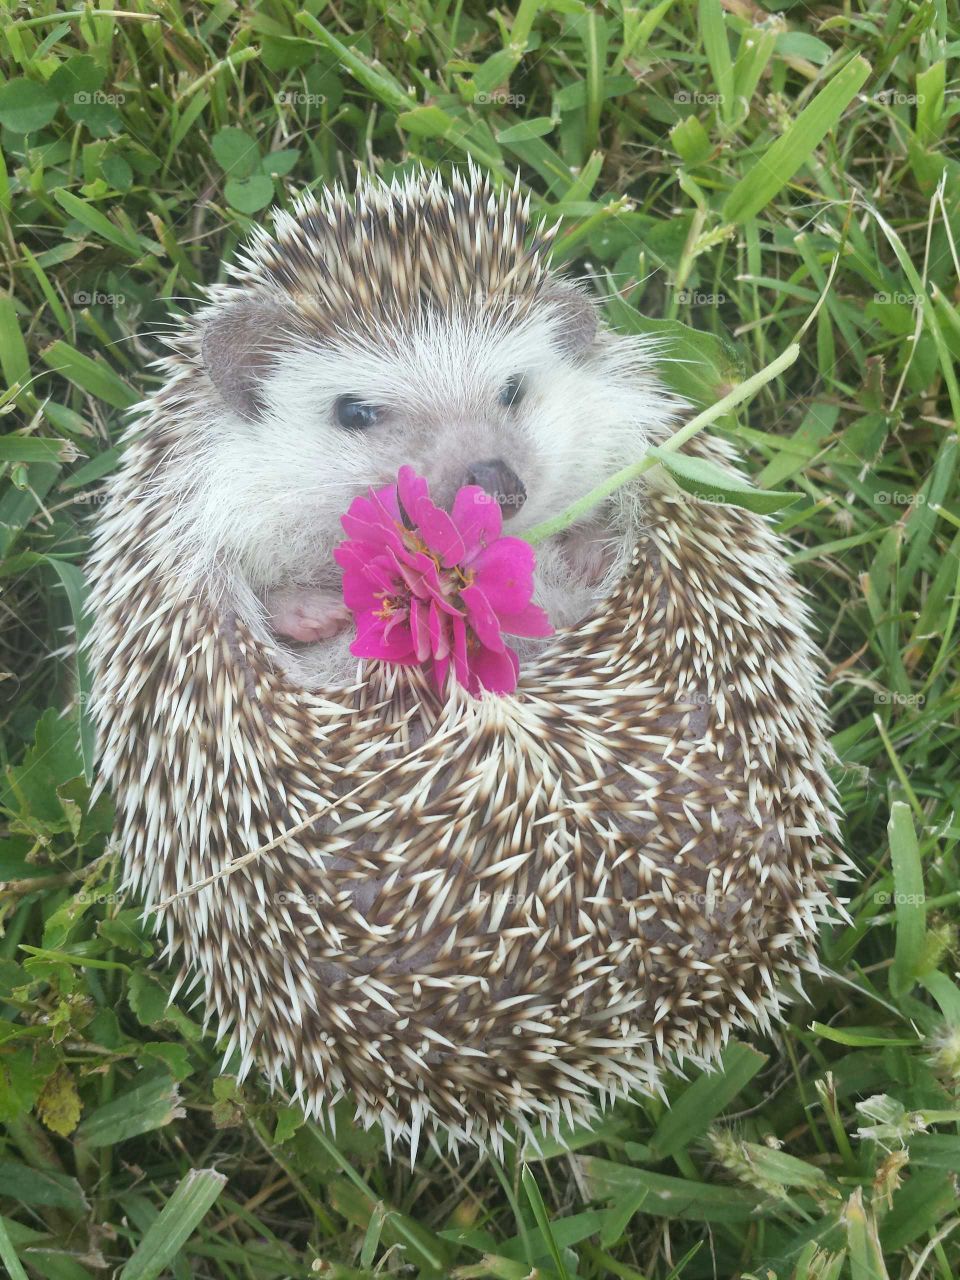 Hedgehog on grassy land